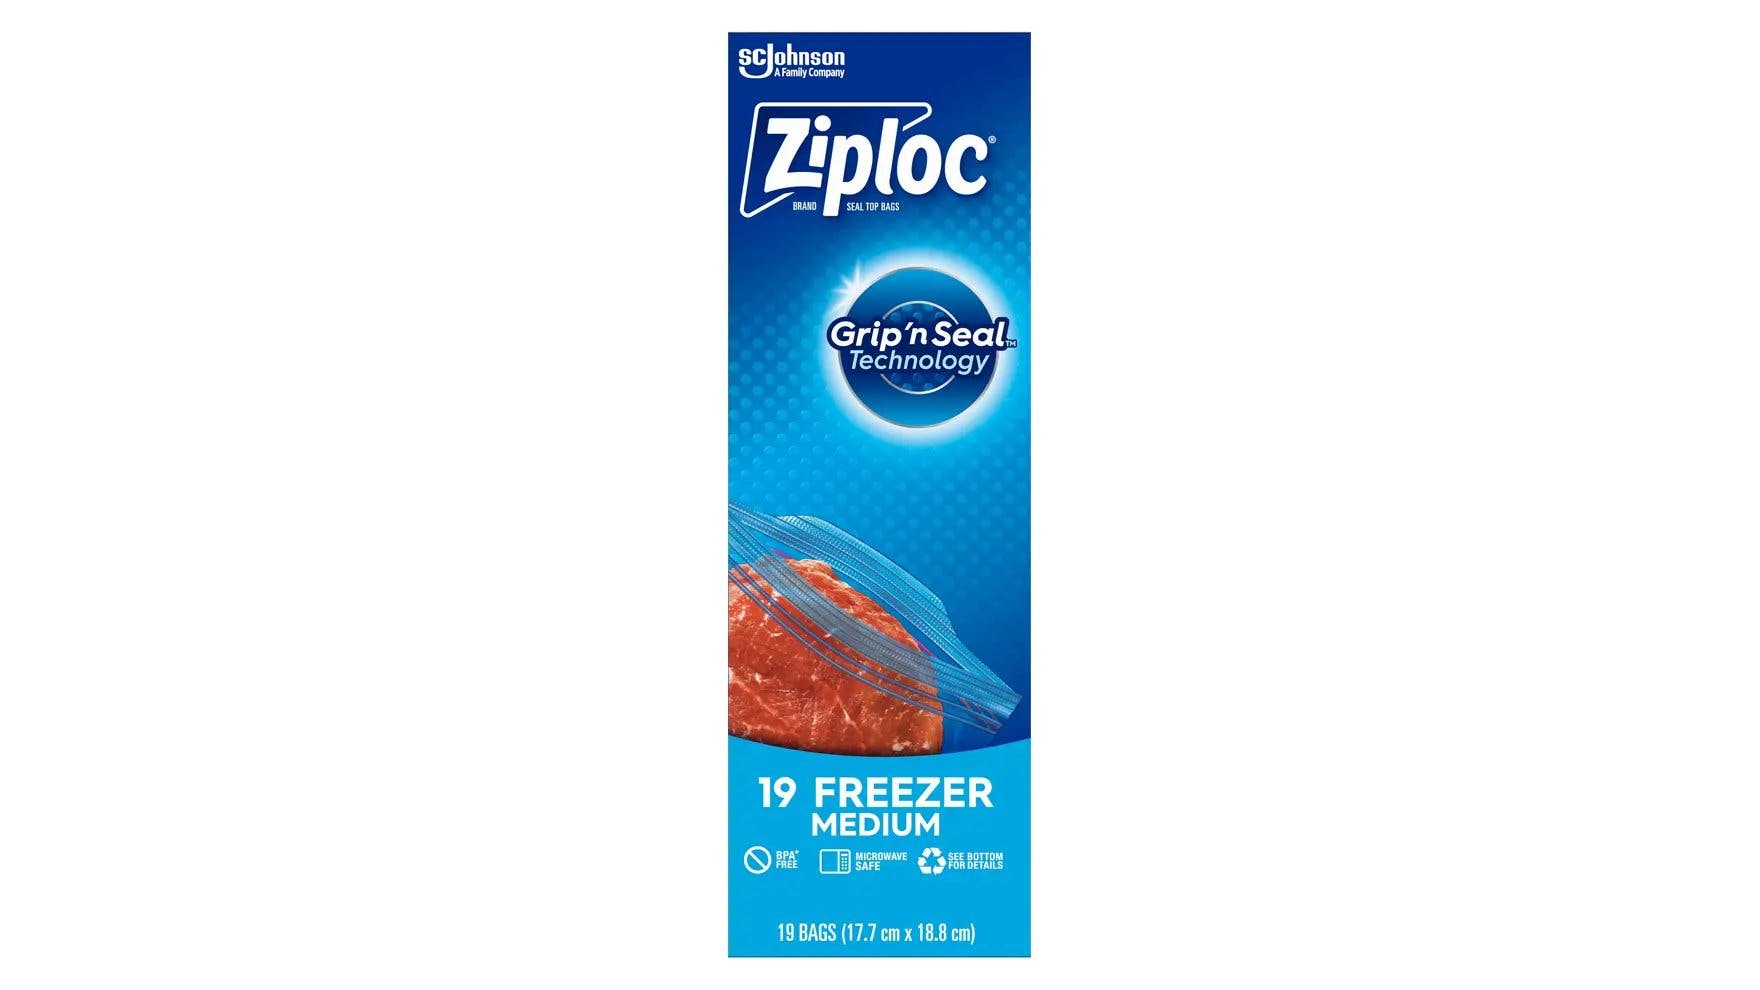 Top of Ziploc medium freezer bag box.